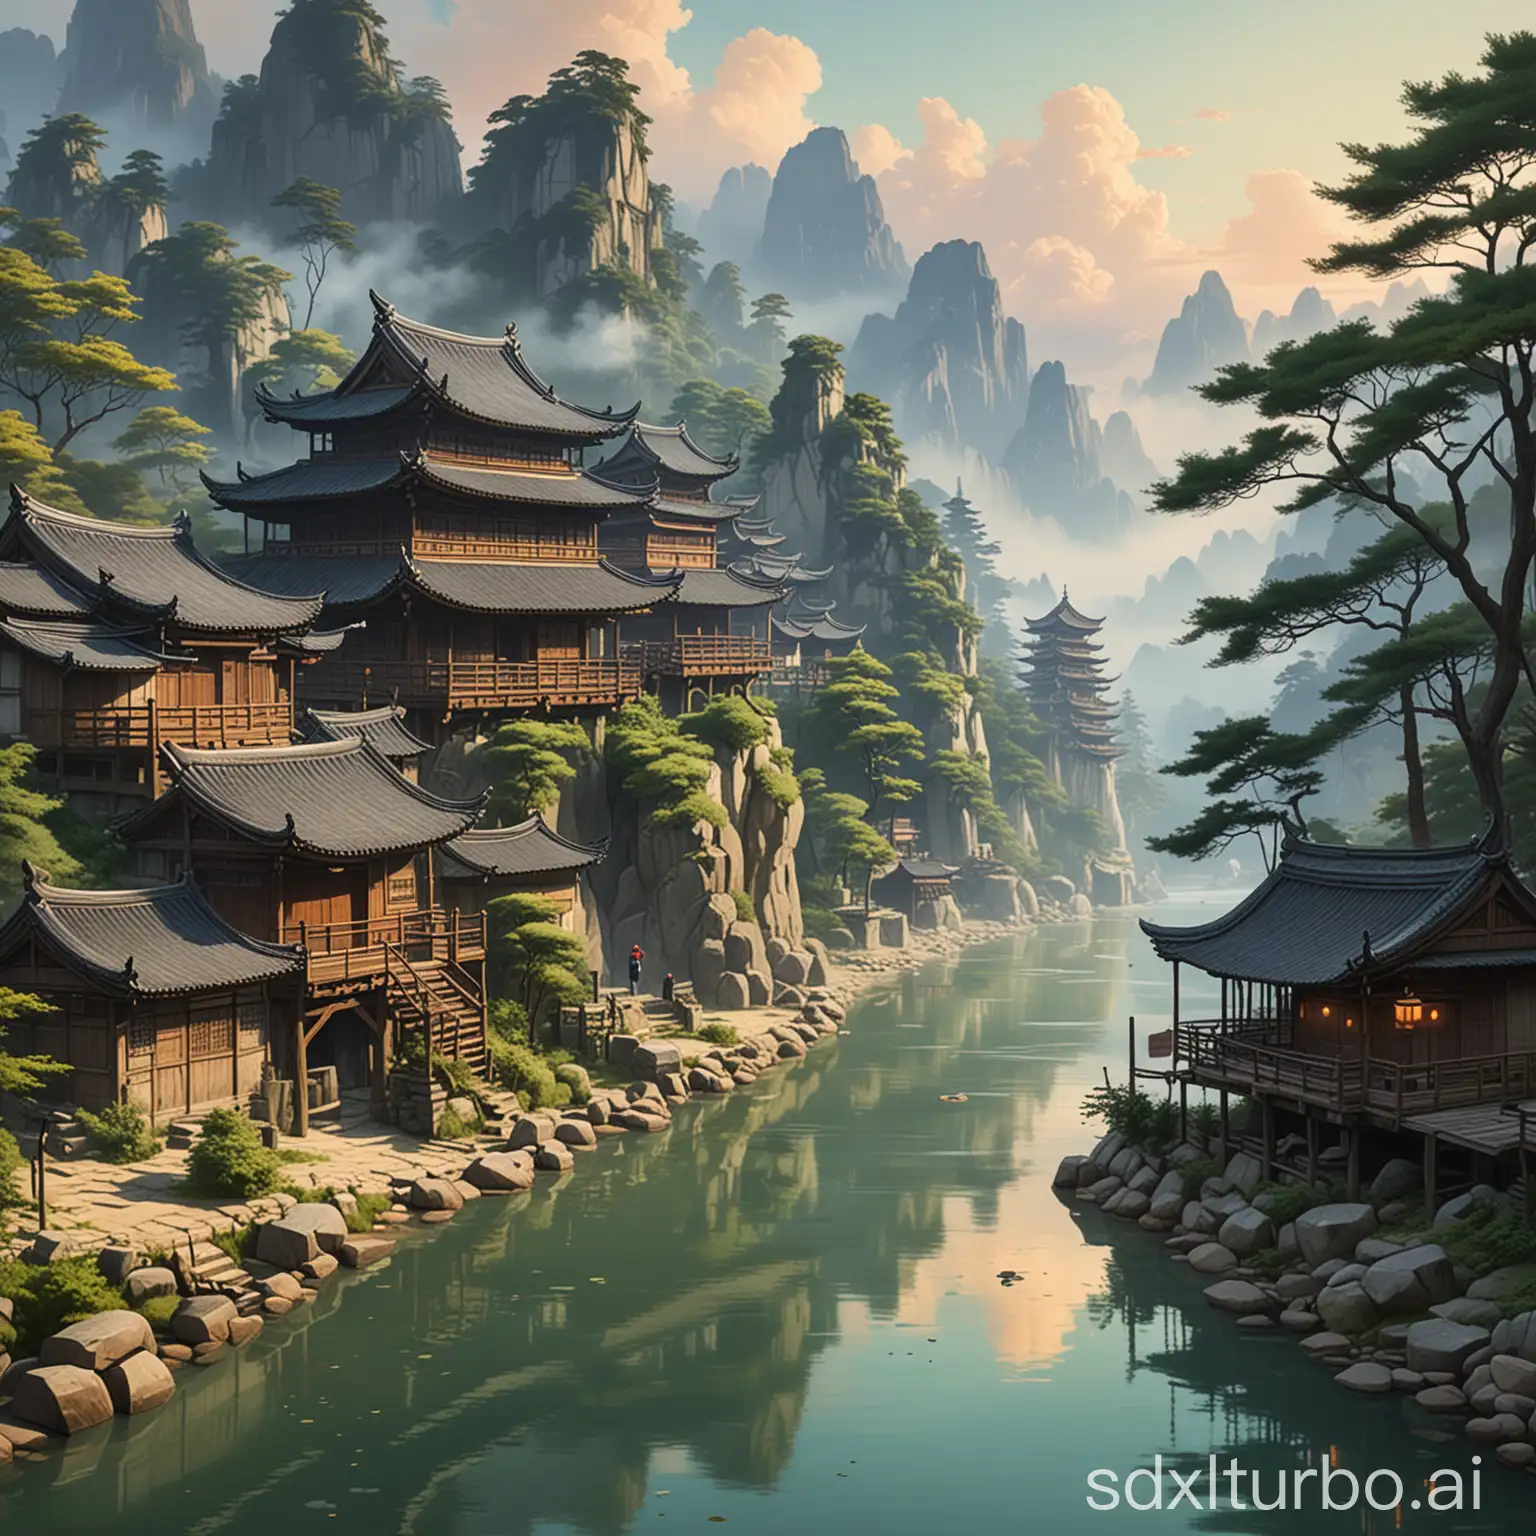 The Hubei scenery in the style of Miyazaki Hayao